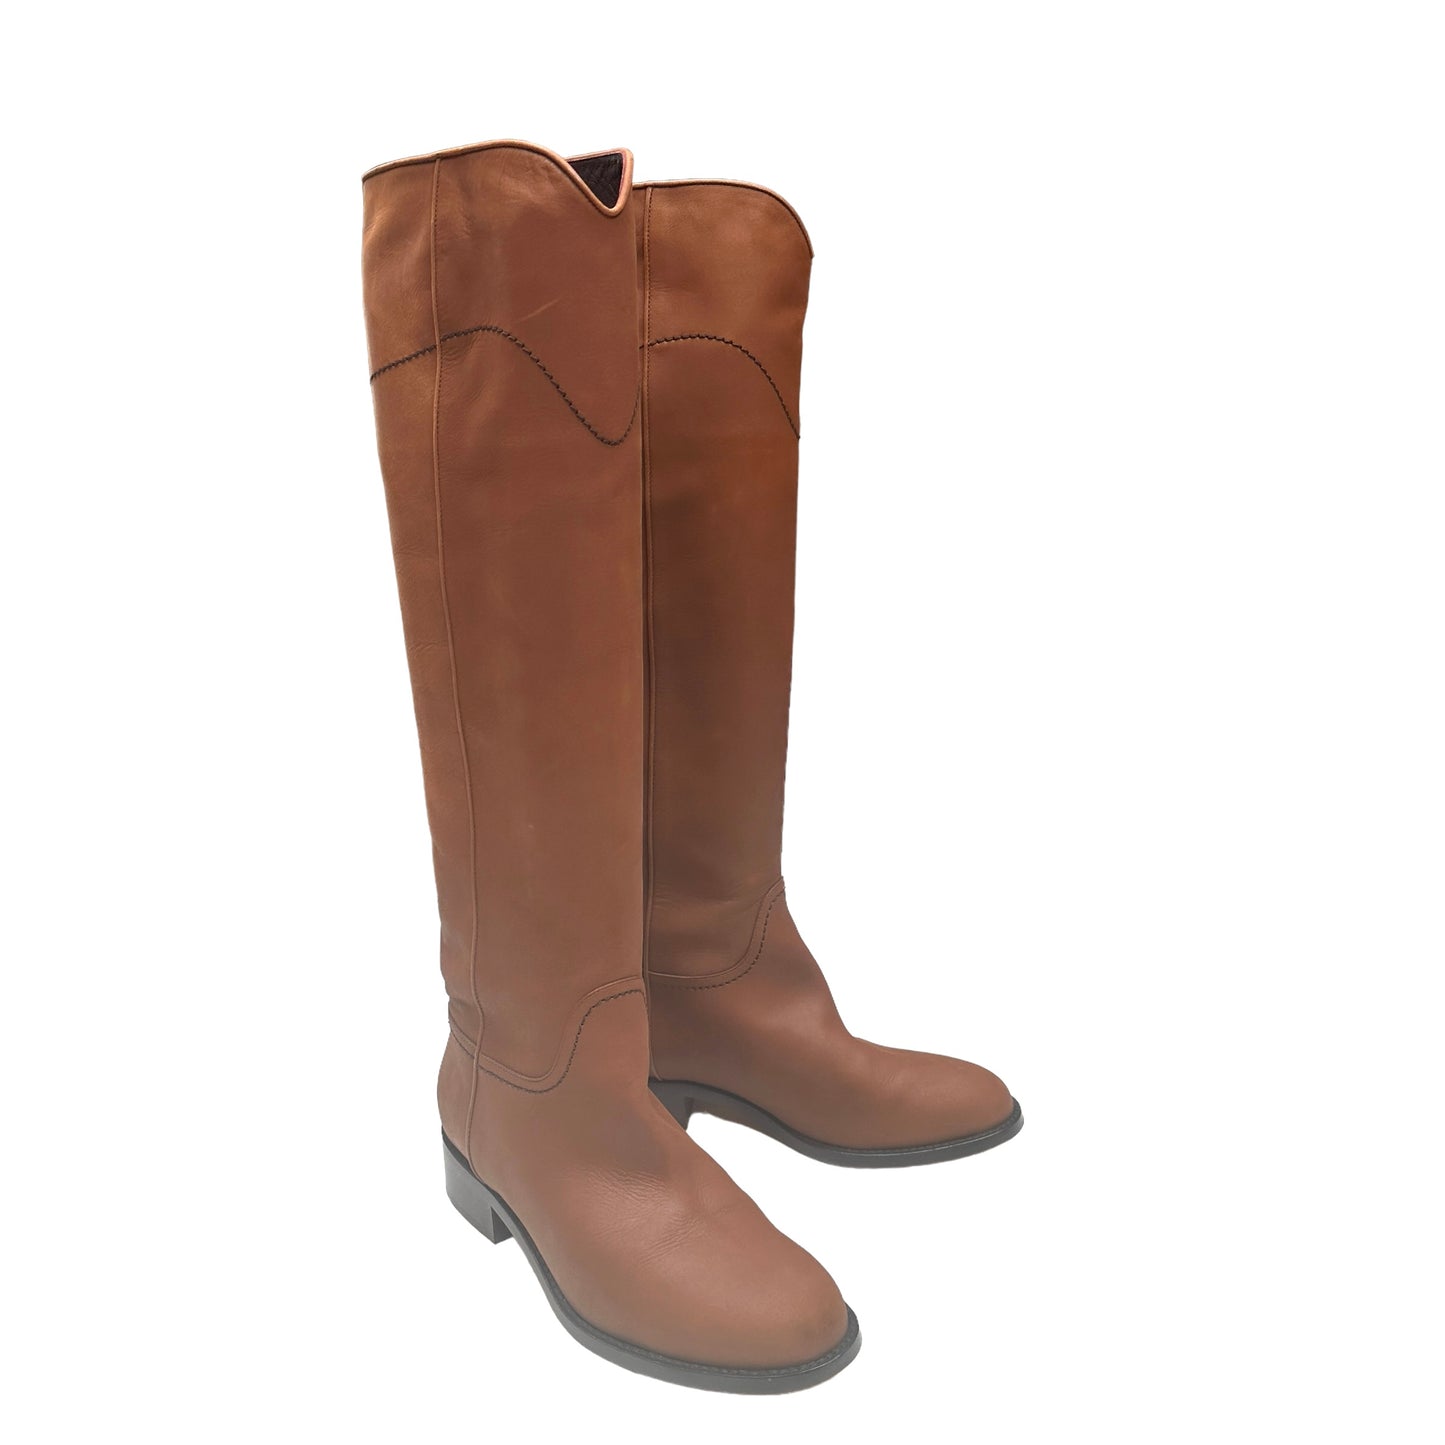 Brown Tall Nubuck Boots - 7.5